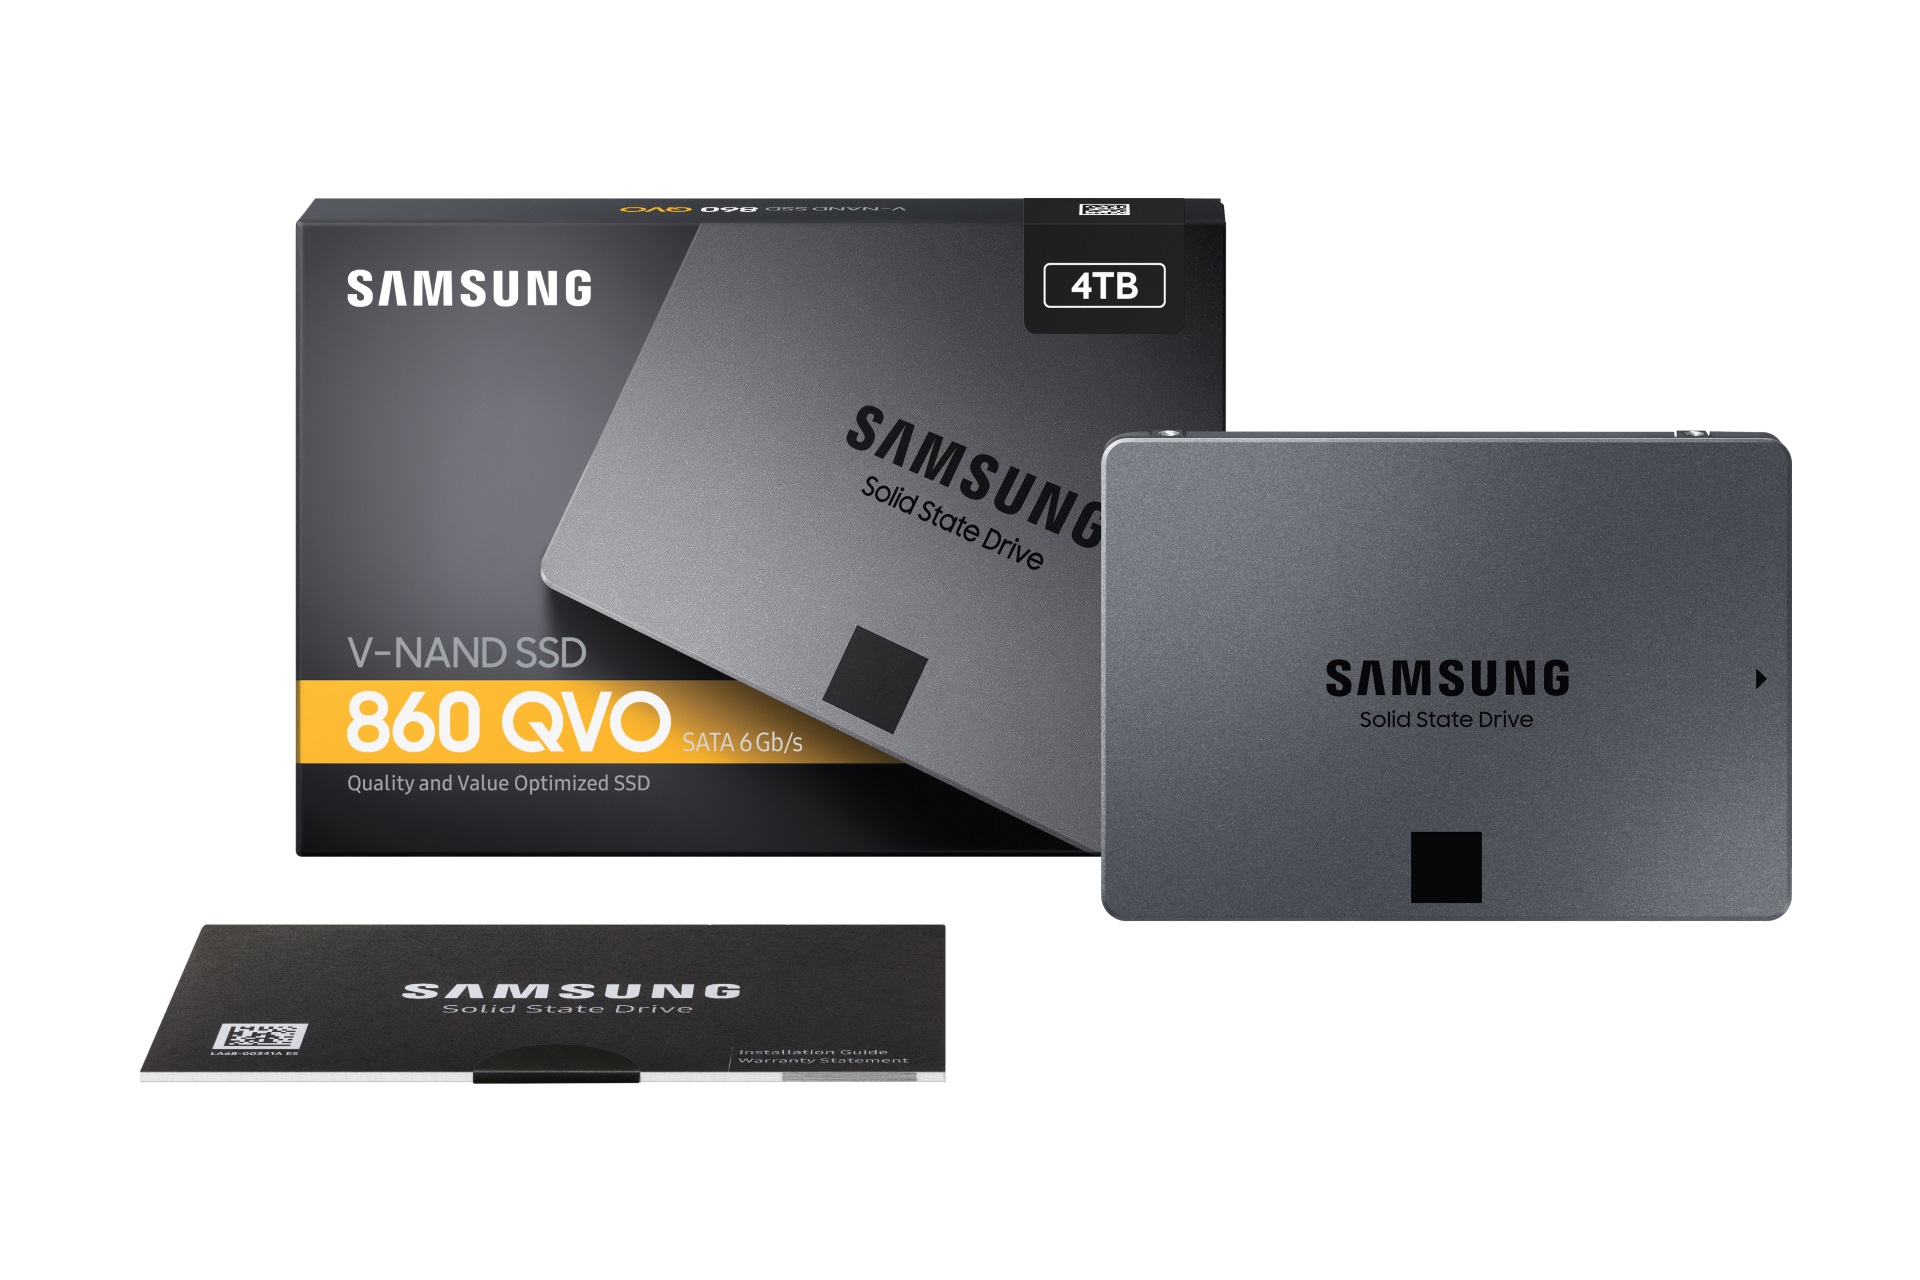 Squirrel lake Fjord Samsung 860 QVO SSD (SATA, 2.5 inch) Review - NotebookCheck.net Reviews